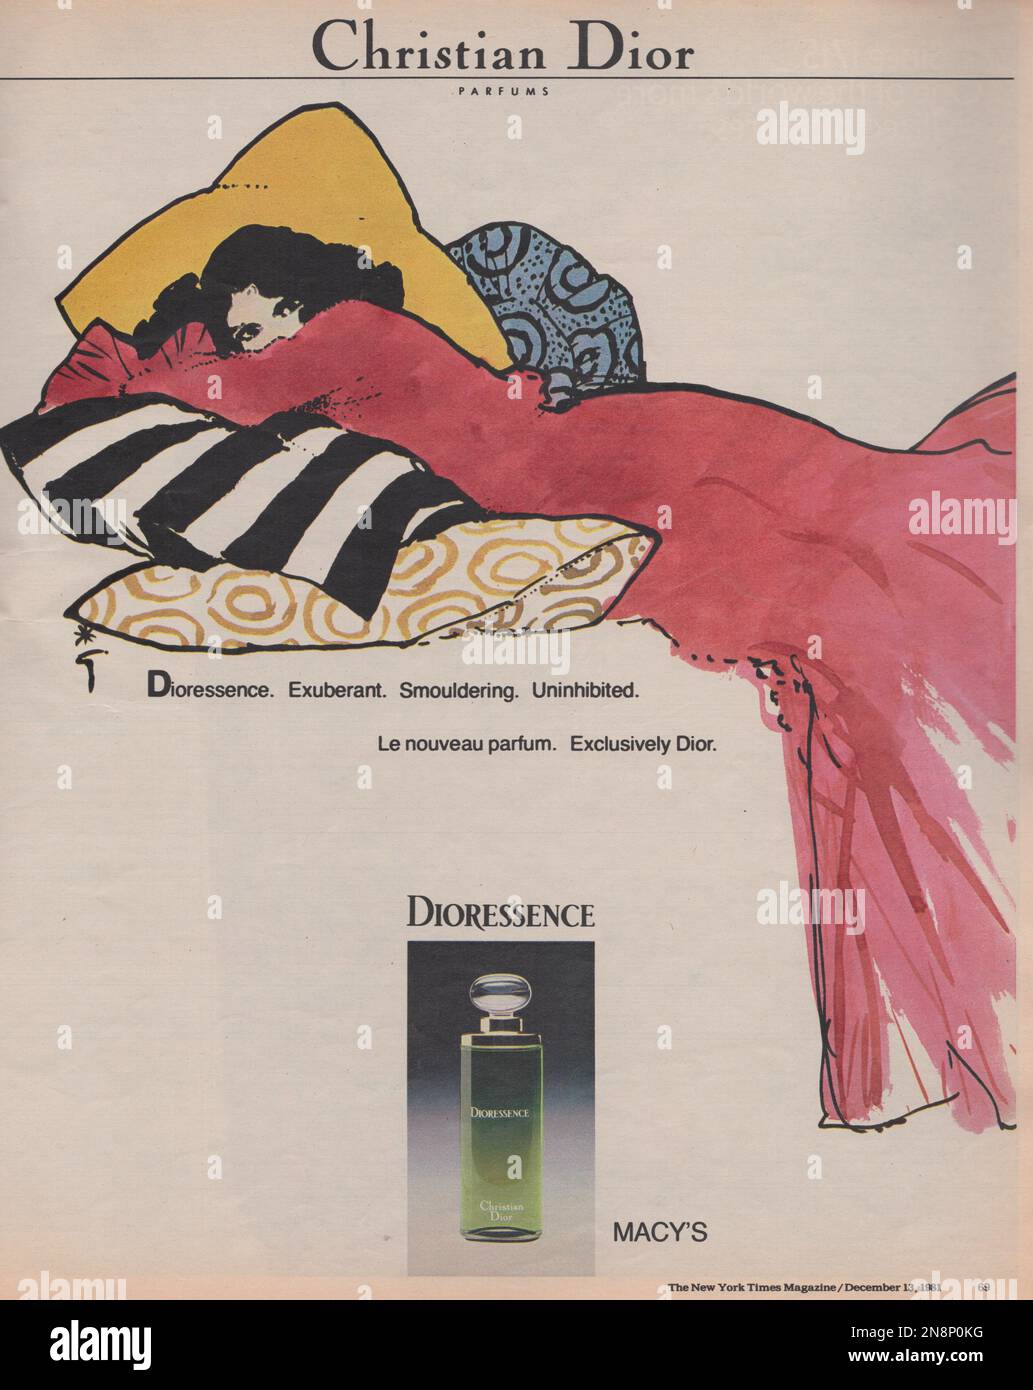 Christian Dior Dioressence Christian Dior Parfums magazine advertisement 1981, paper advert The New York Times magazine Stock Photo